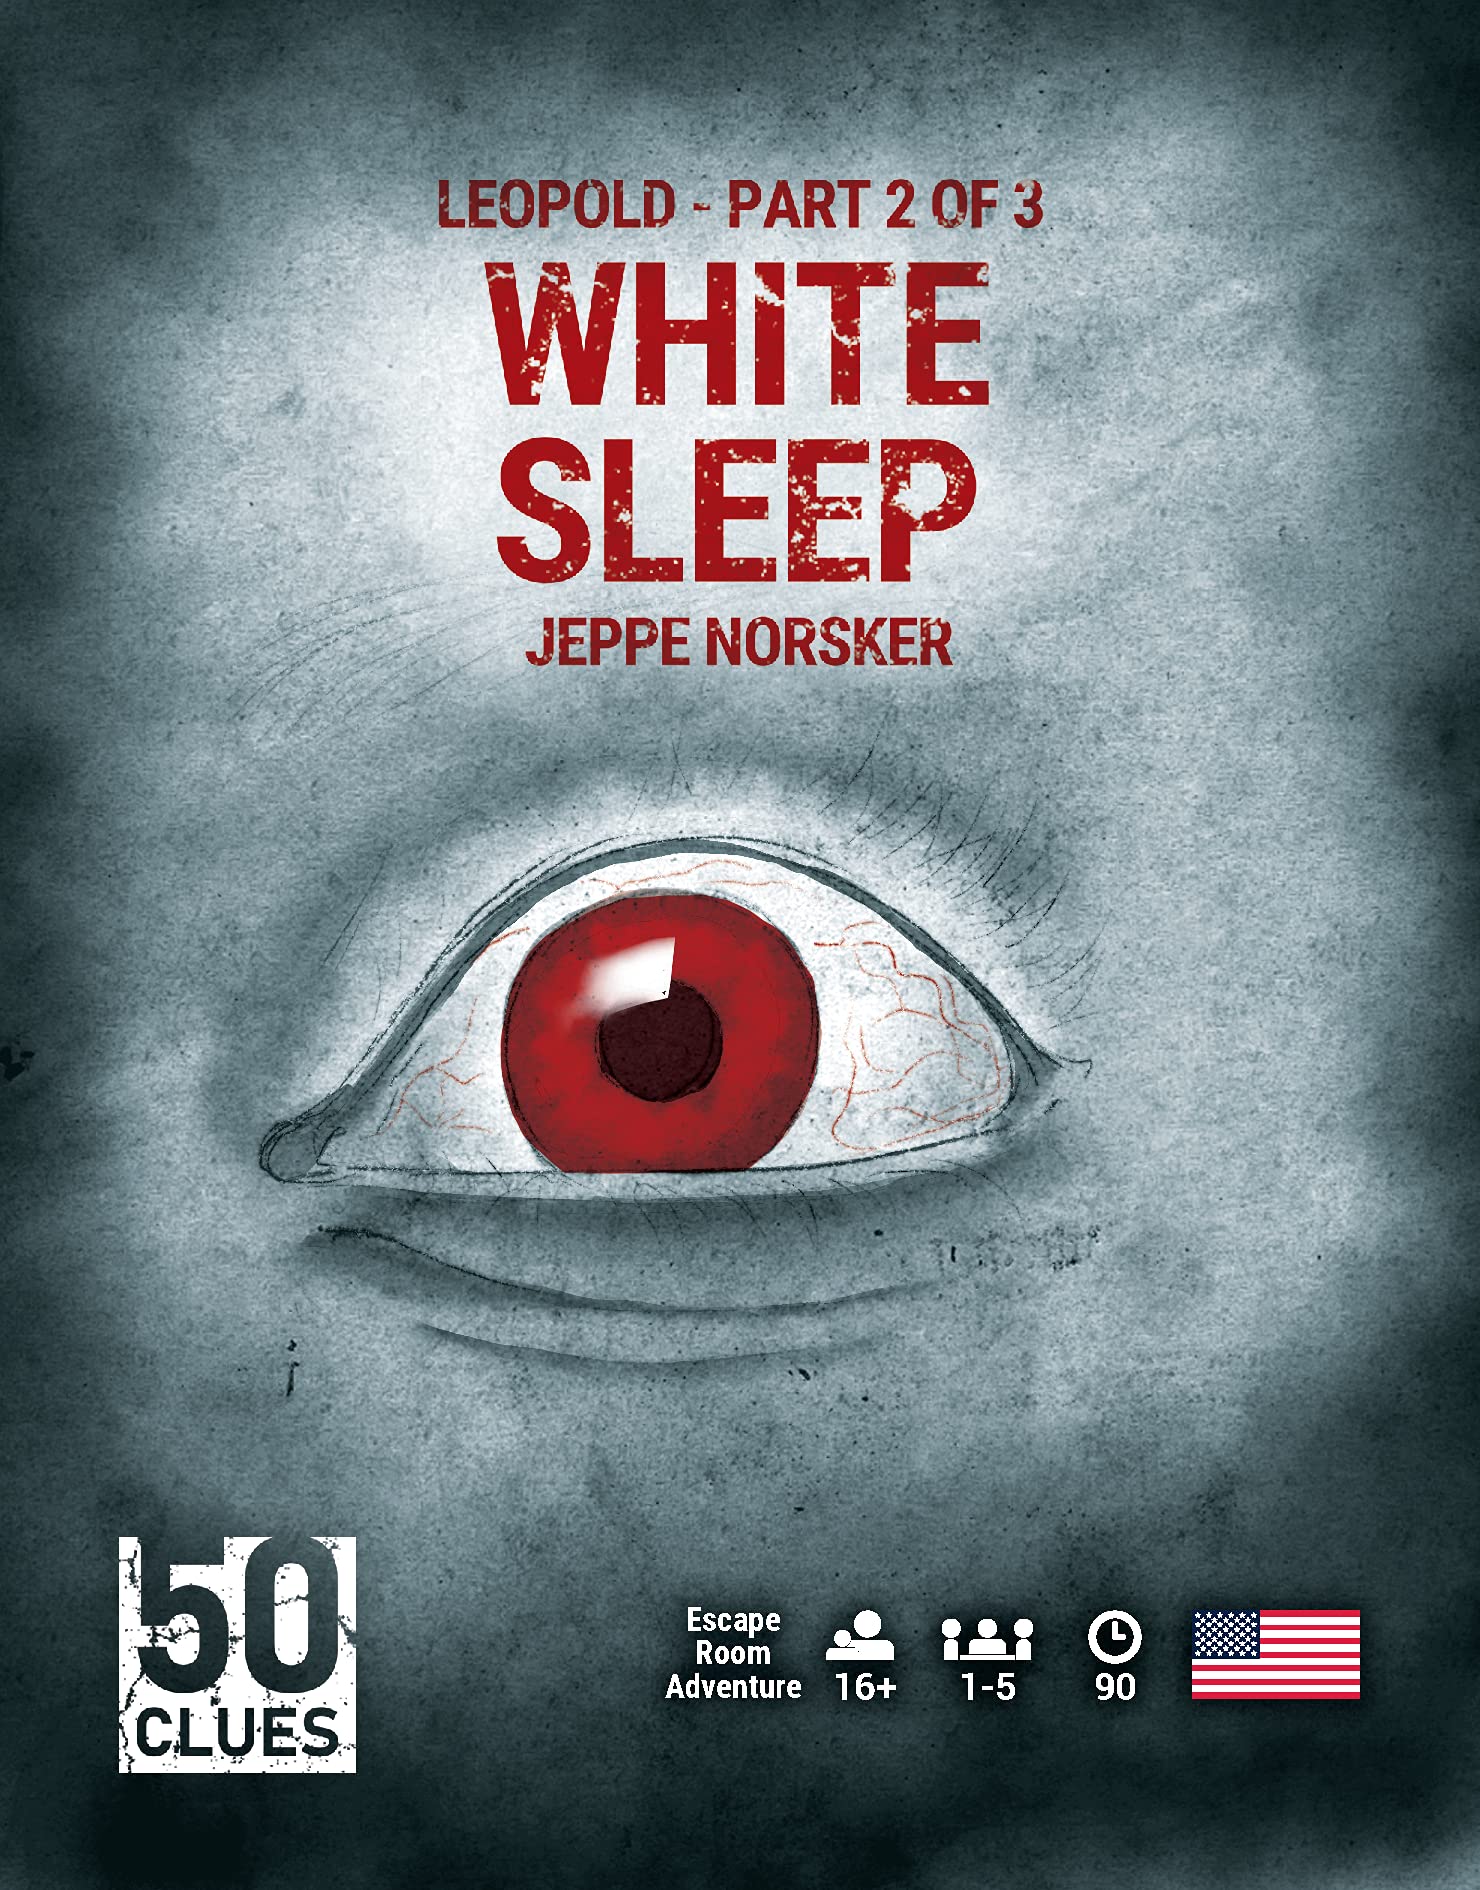 Black Rock 50 Clues: Part 2: White Sleep